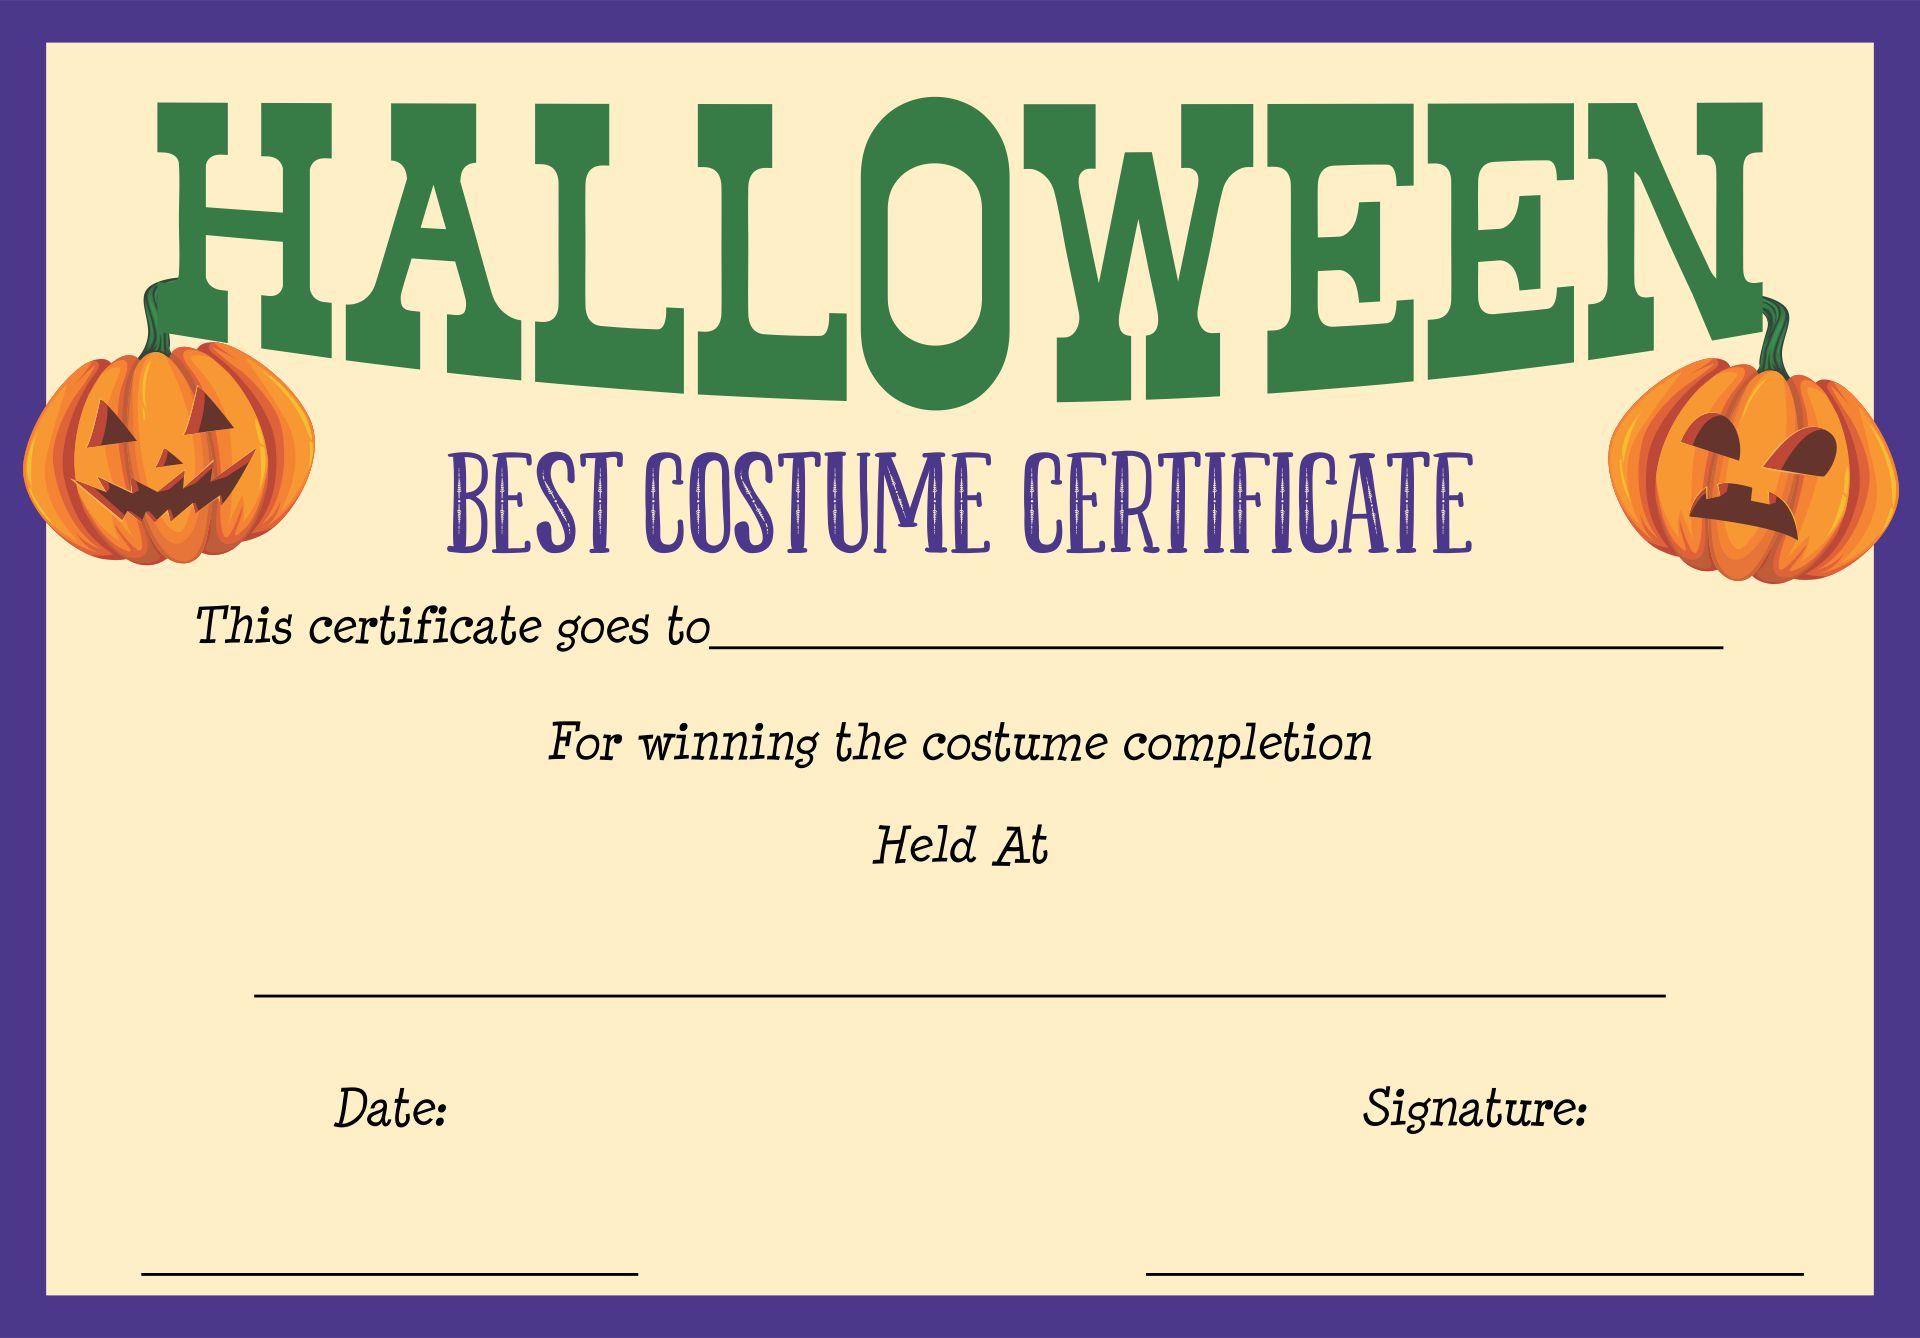 4 Best Images of Halloween Costume Awards Printable - Halloween Best ...